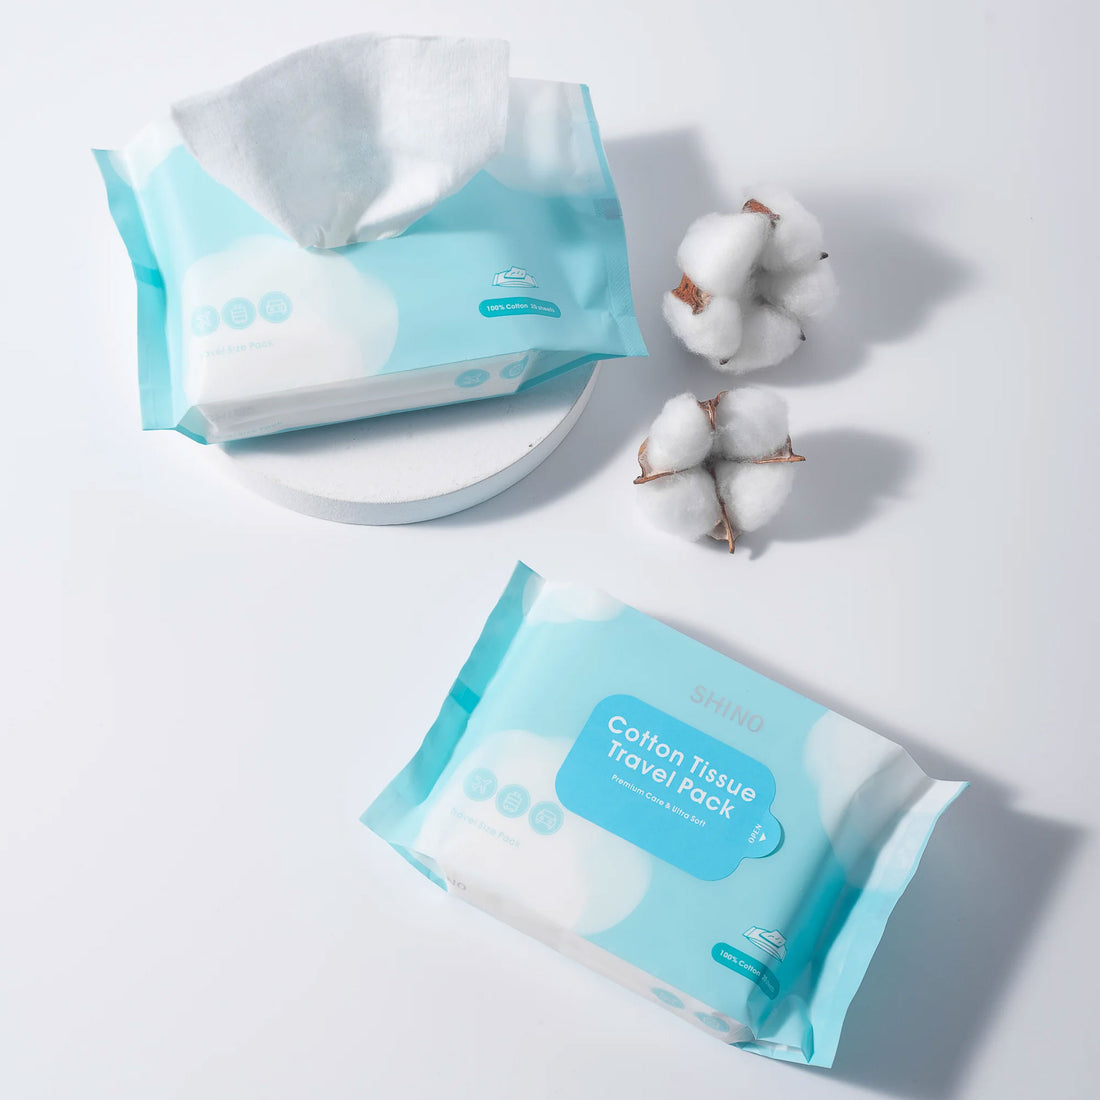 SHINO Premium Care Ultra Soft Towels Tissue